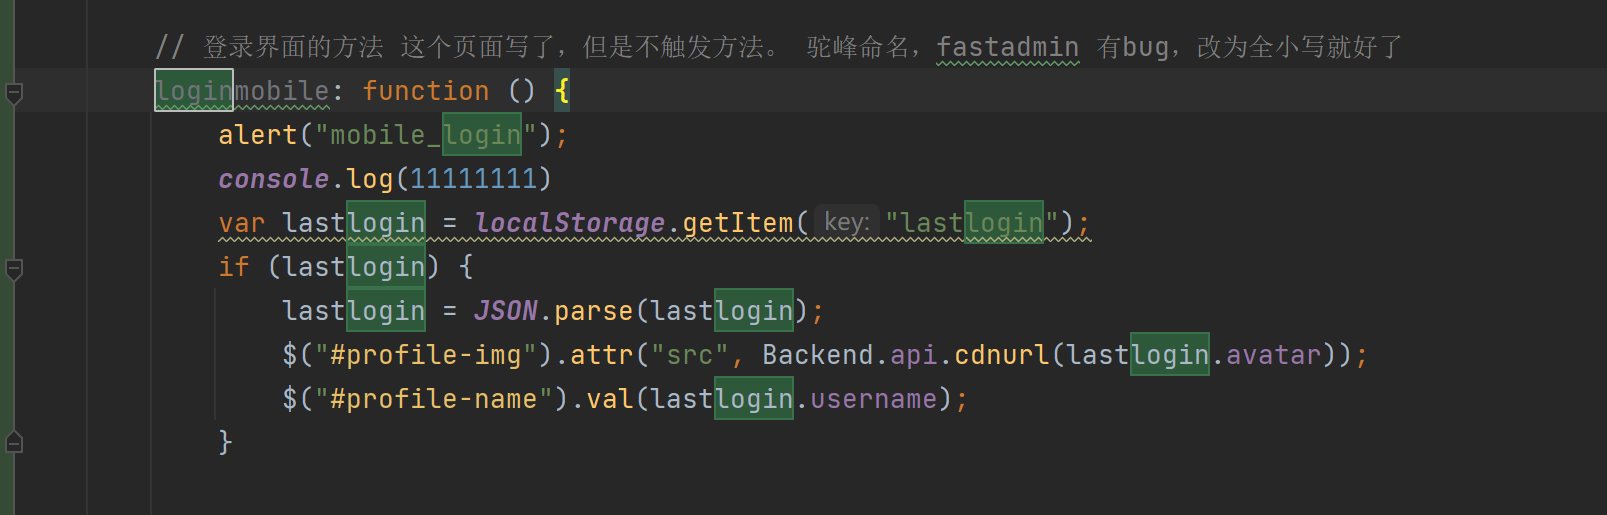 [fastadmin]第二十篇 fastadmin 开发新页面 新方法 新js，尽量全小写命名，驼峰则无法自动匹配到js